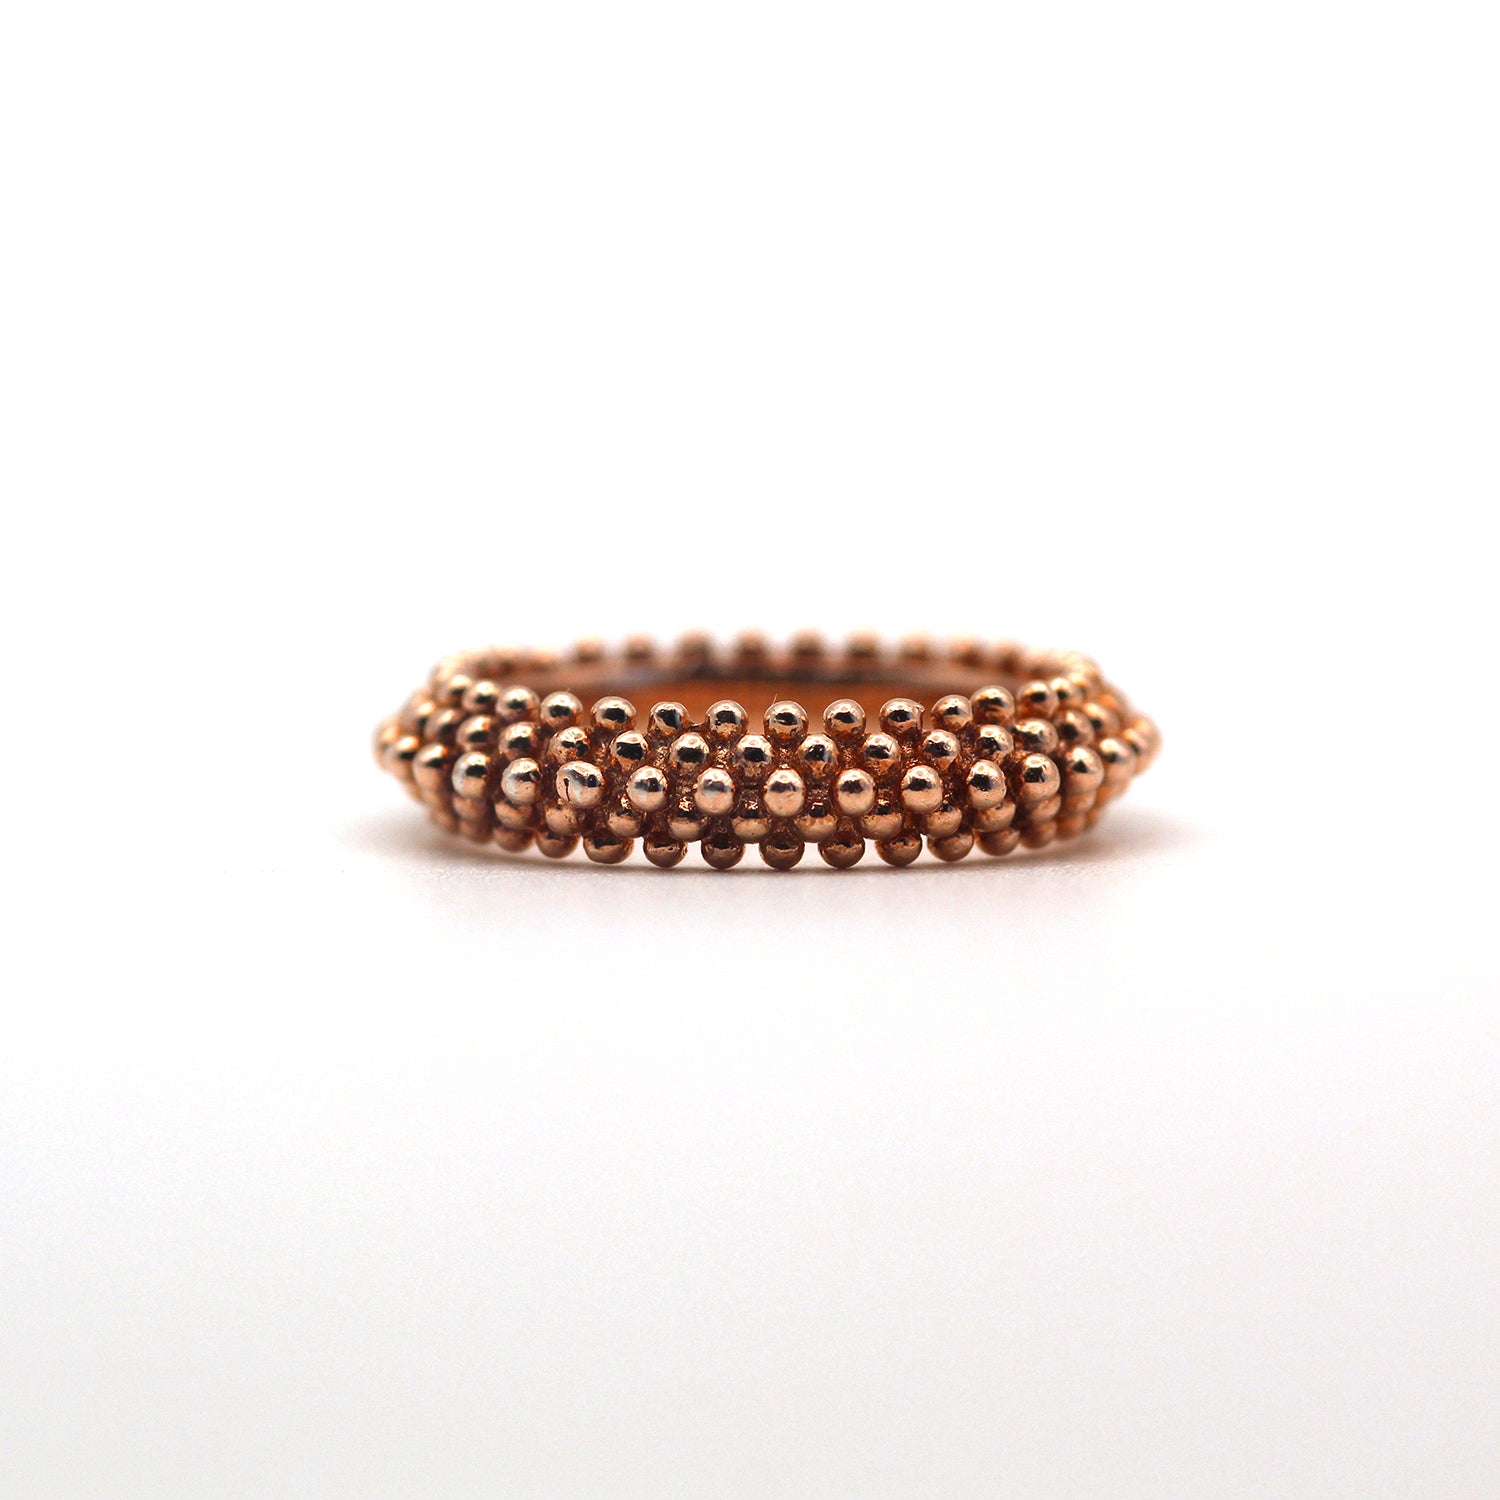 Handmade 14k Gold Ball Texture Ring.